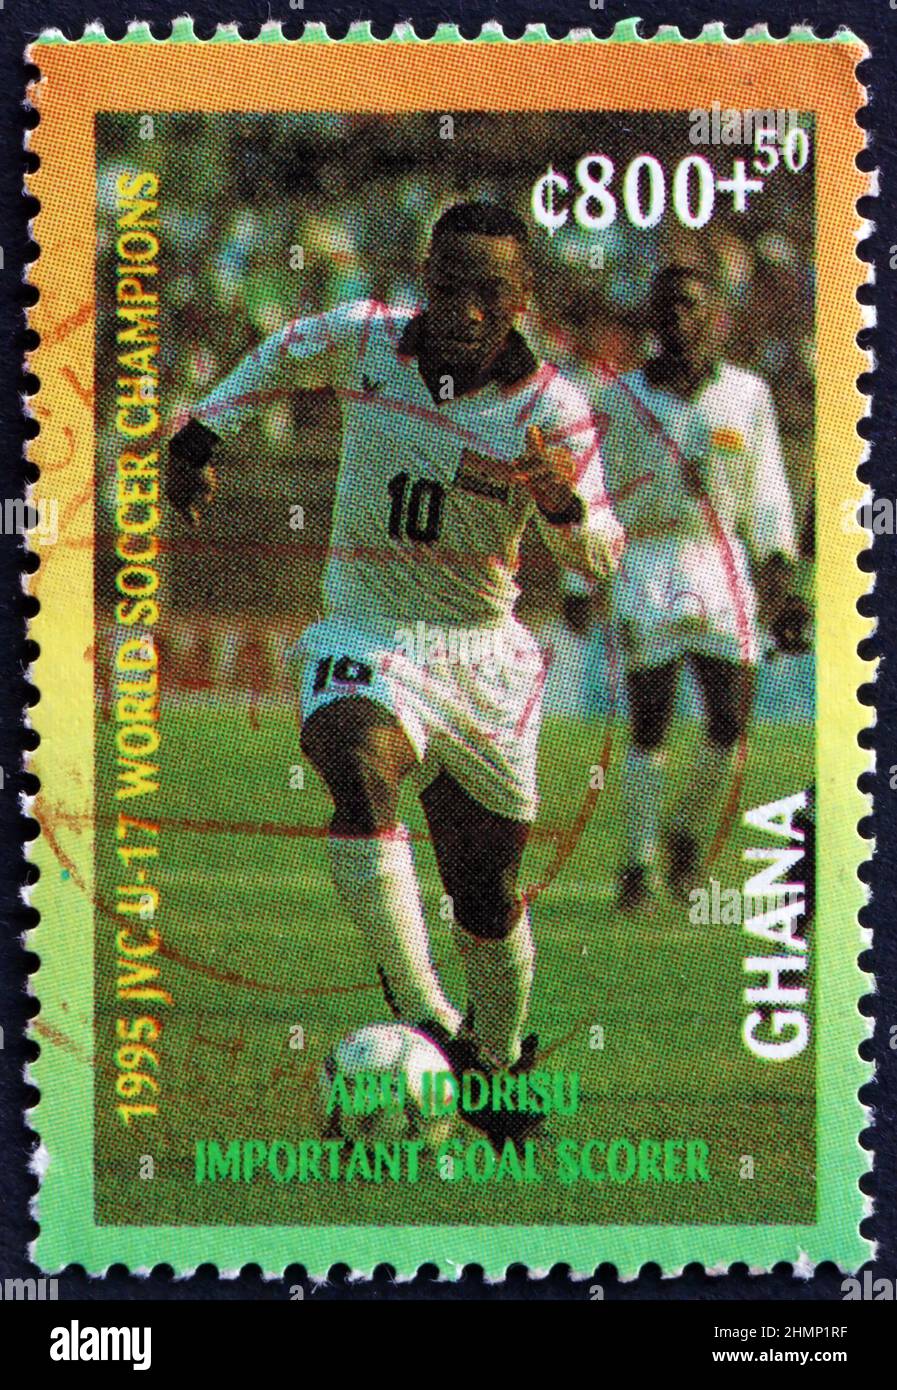 GHANA - CIRCA 1997: a stamp printed in Ghana shows Abu Idorisu, soccer player, circa 1997 Stock Photo